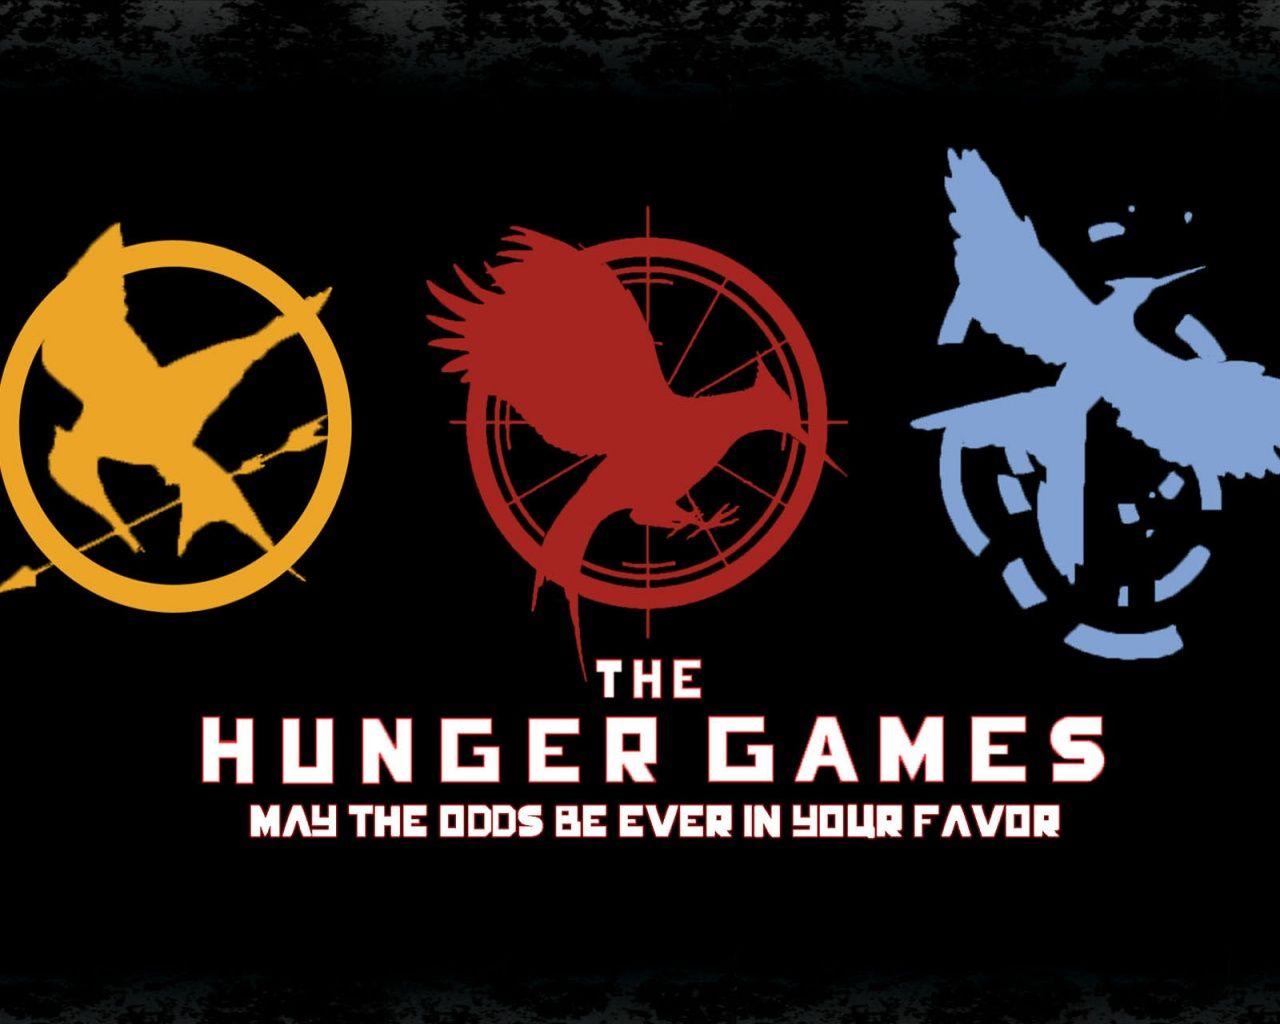 The Hunger Games Logos desktop PC and Mac wallpaper